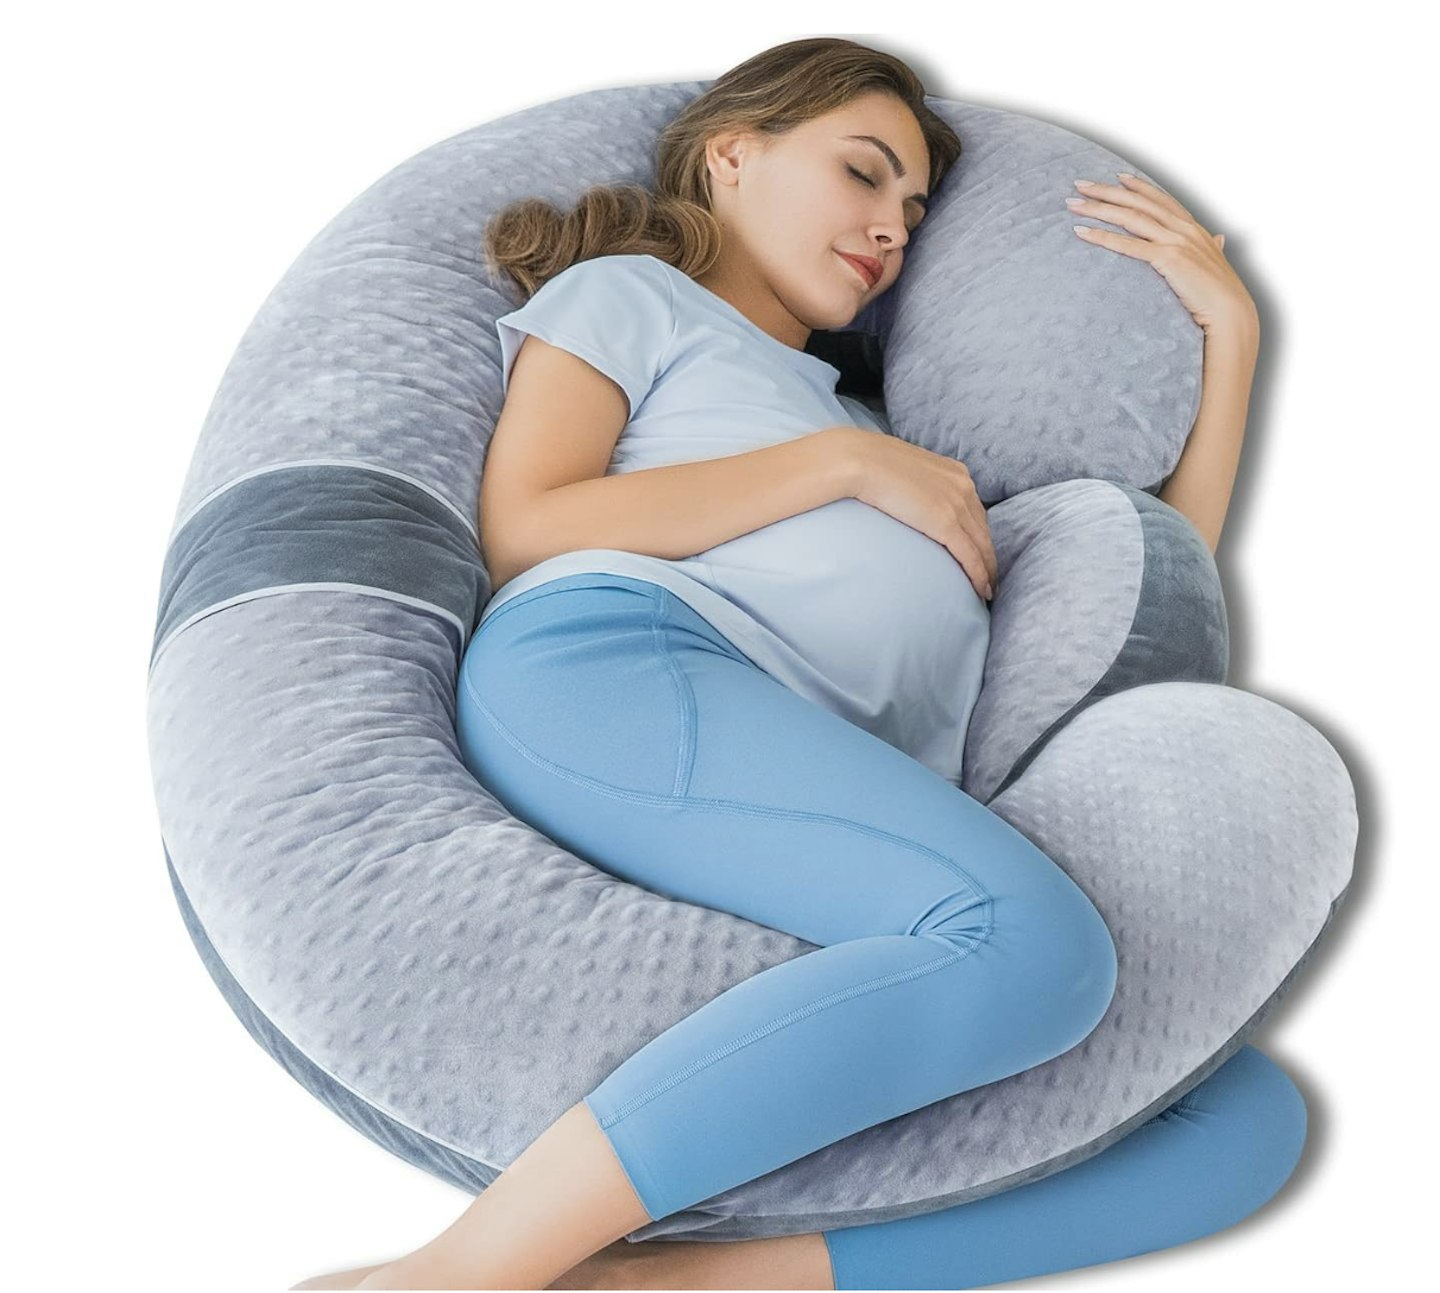  QUEEN ROSE Pregnancy Pillows